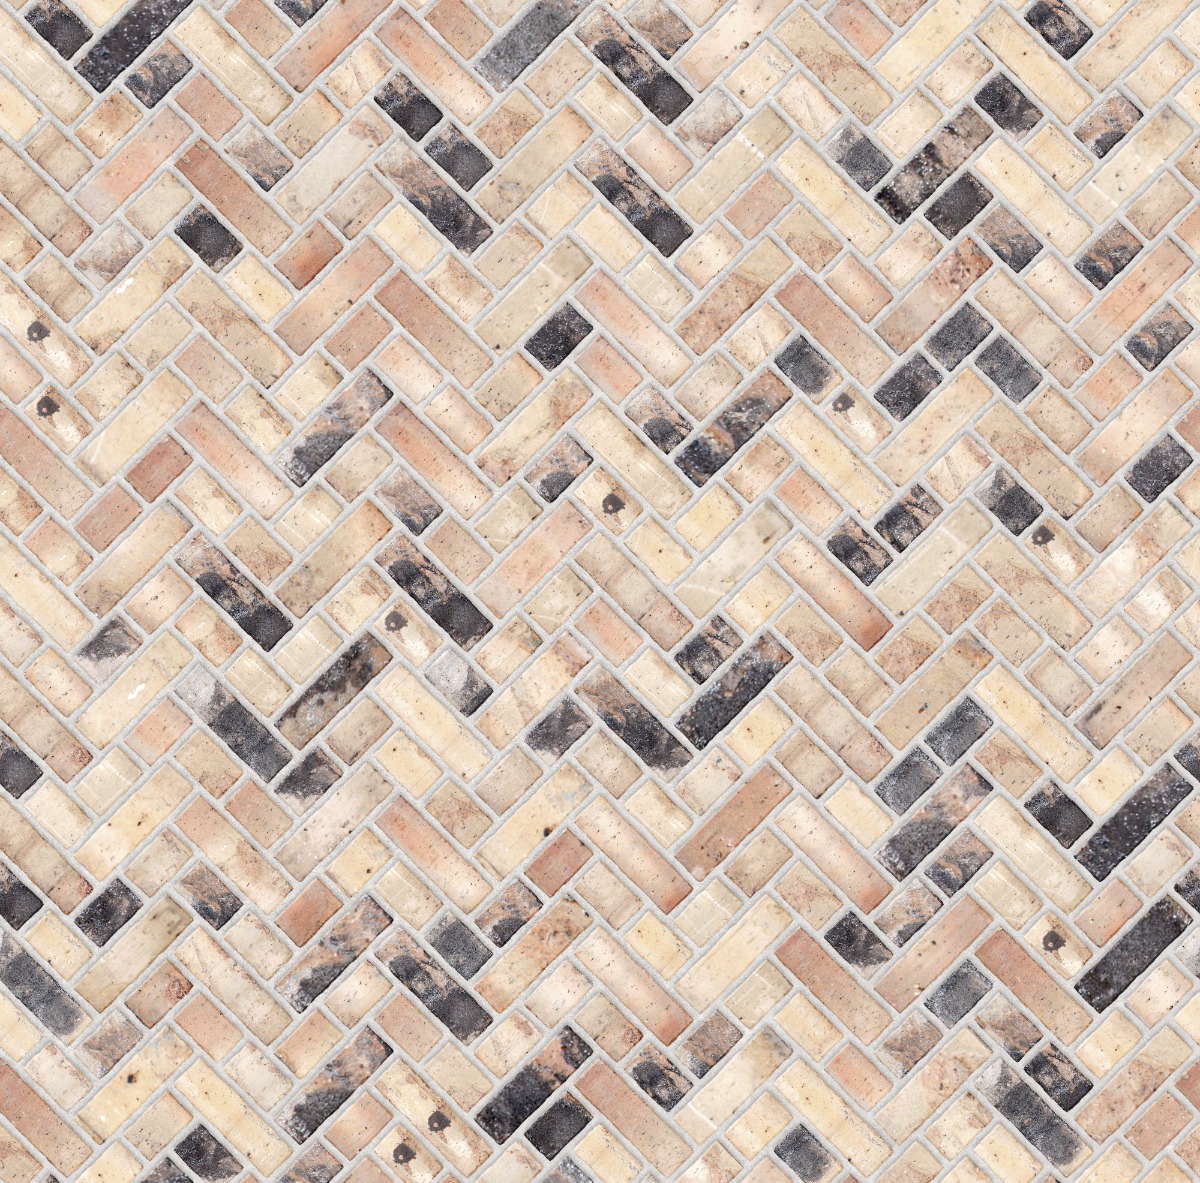 A seamless brick texture with corvus brick units arranged in a Broken Herringbone pattern